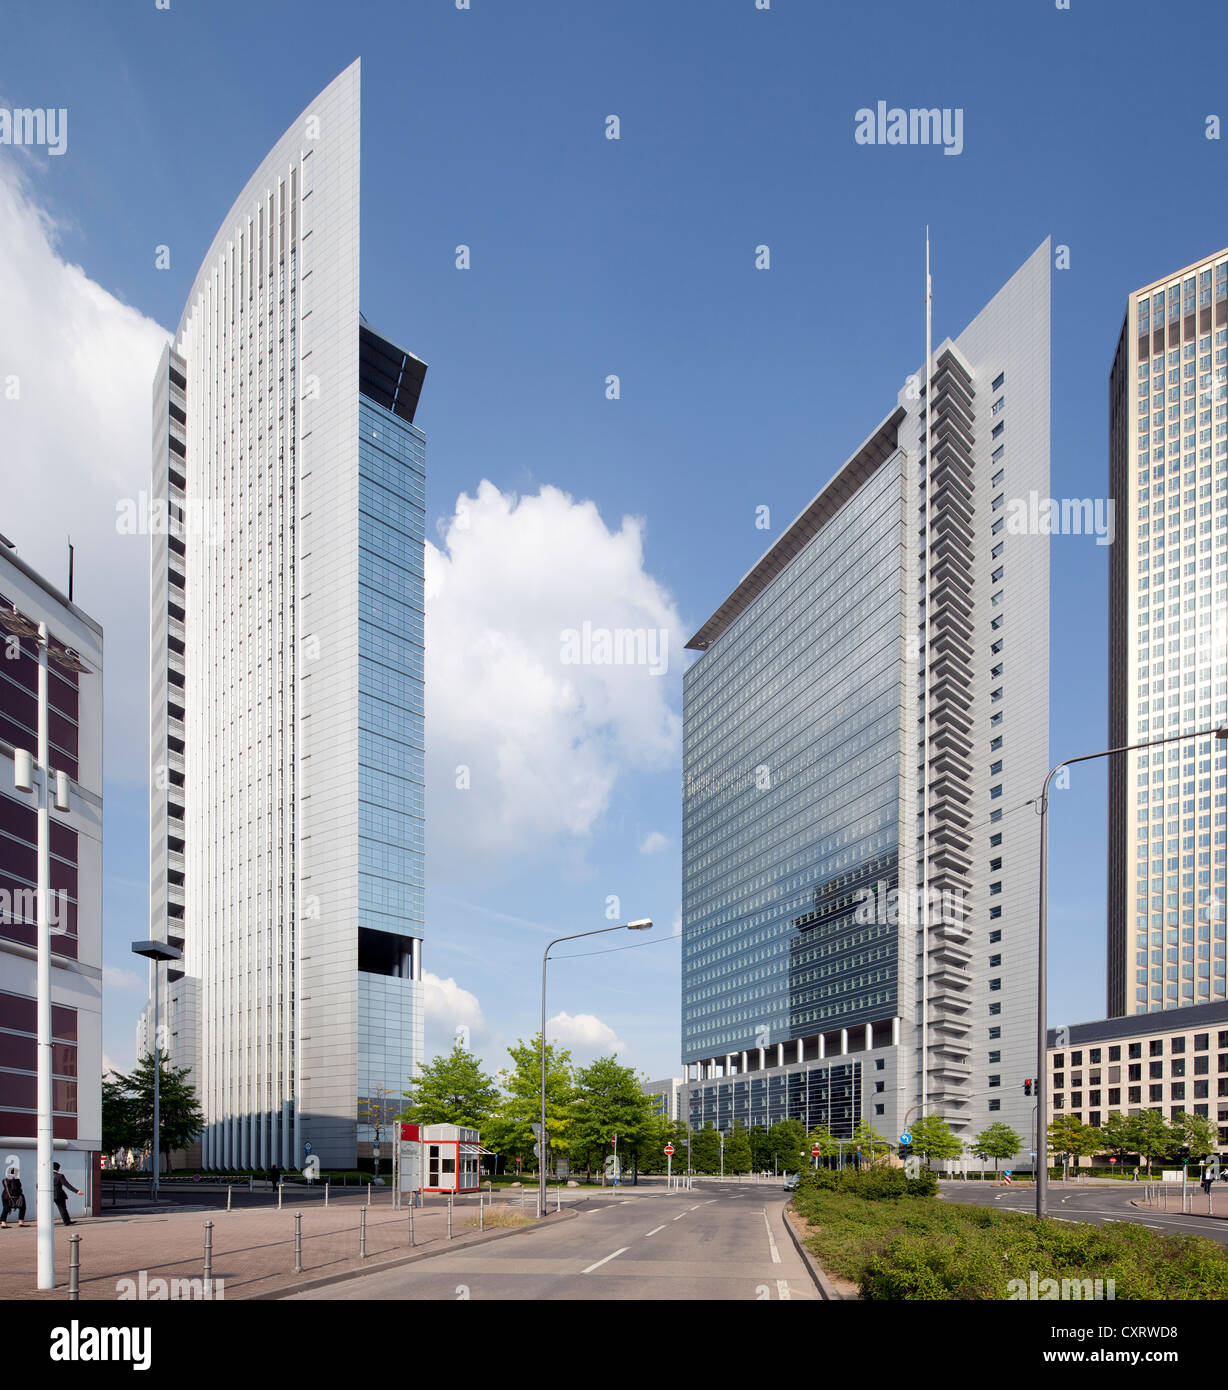 Castore e Polluce edifici per uffici, Frankfurt am Main, Hesse, Germania, Europa PublicGround Foto Stock